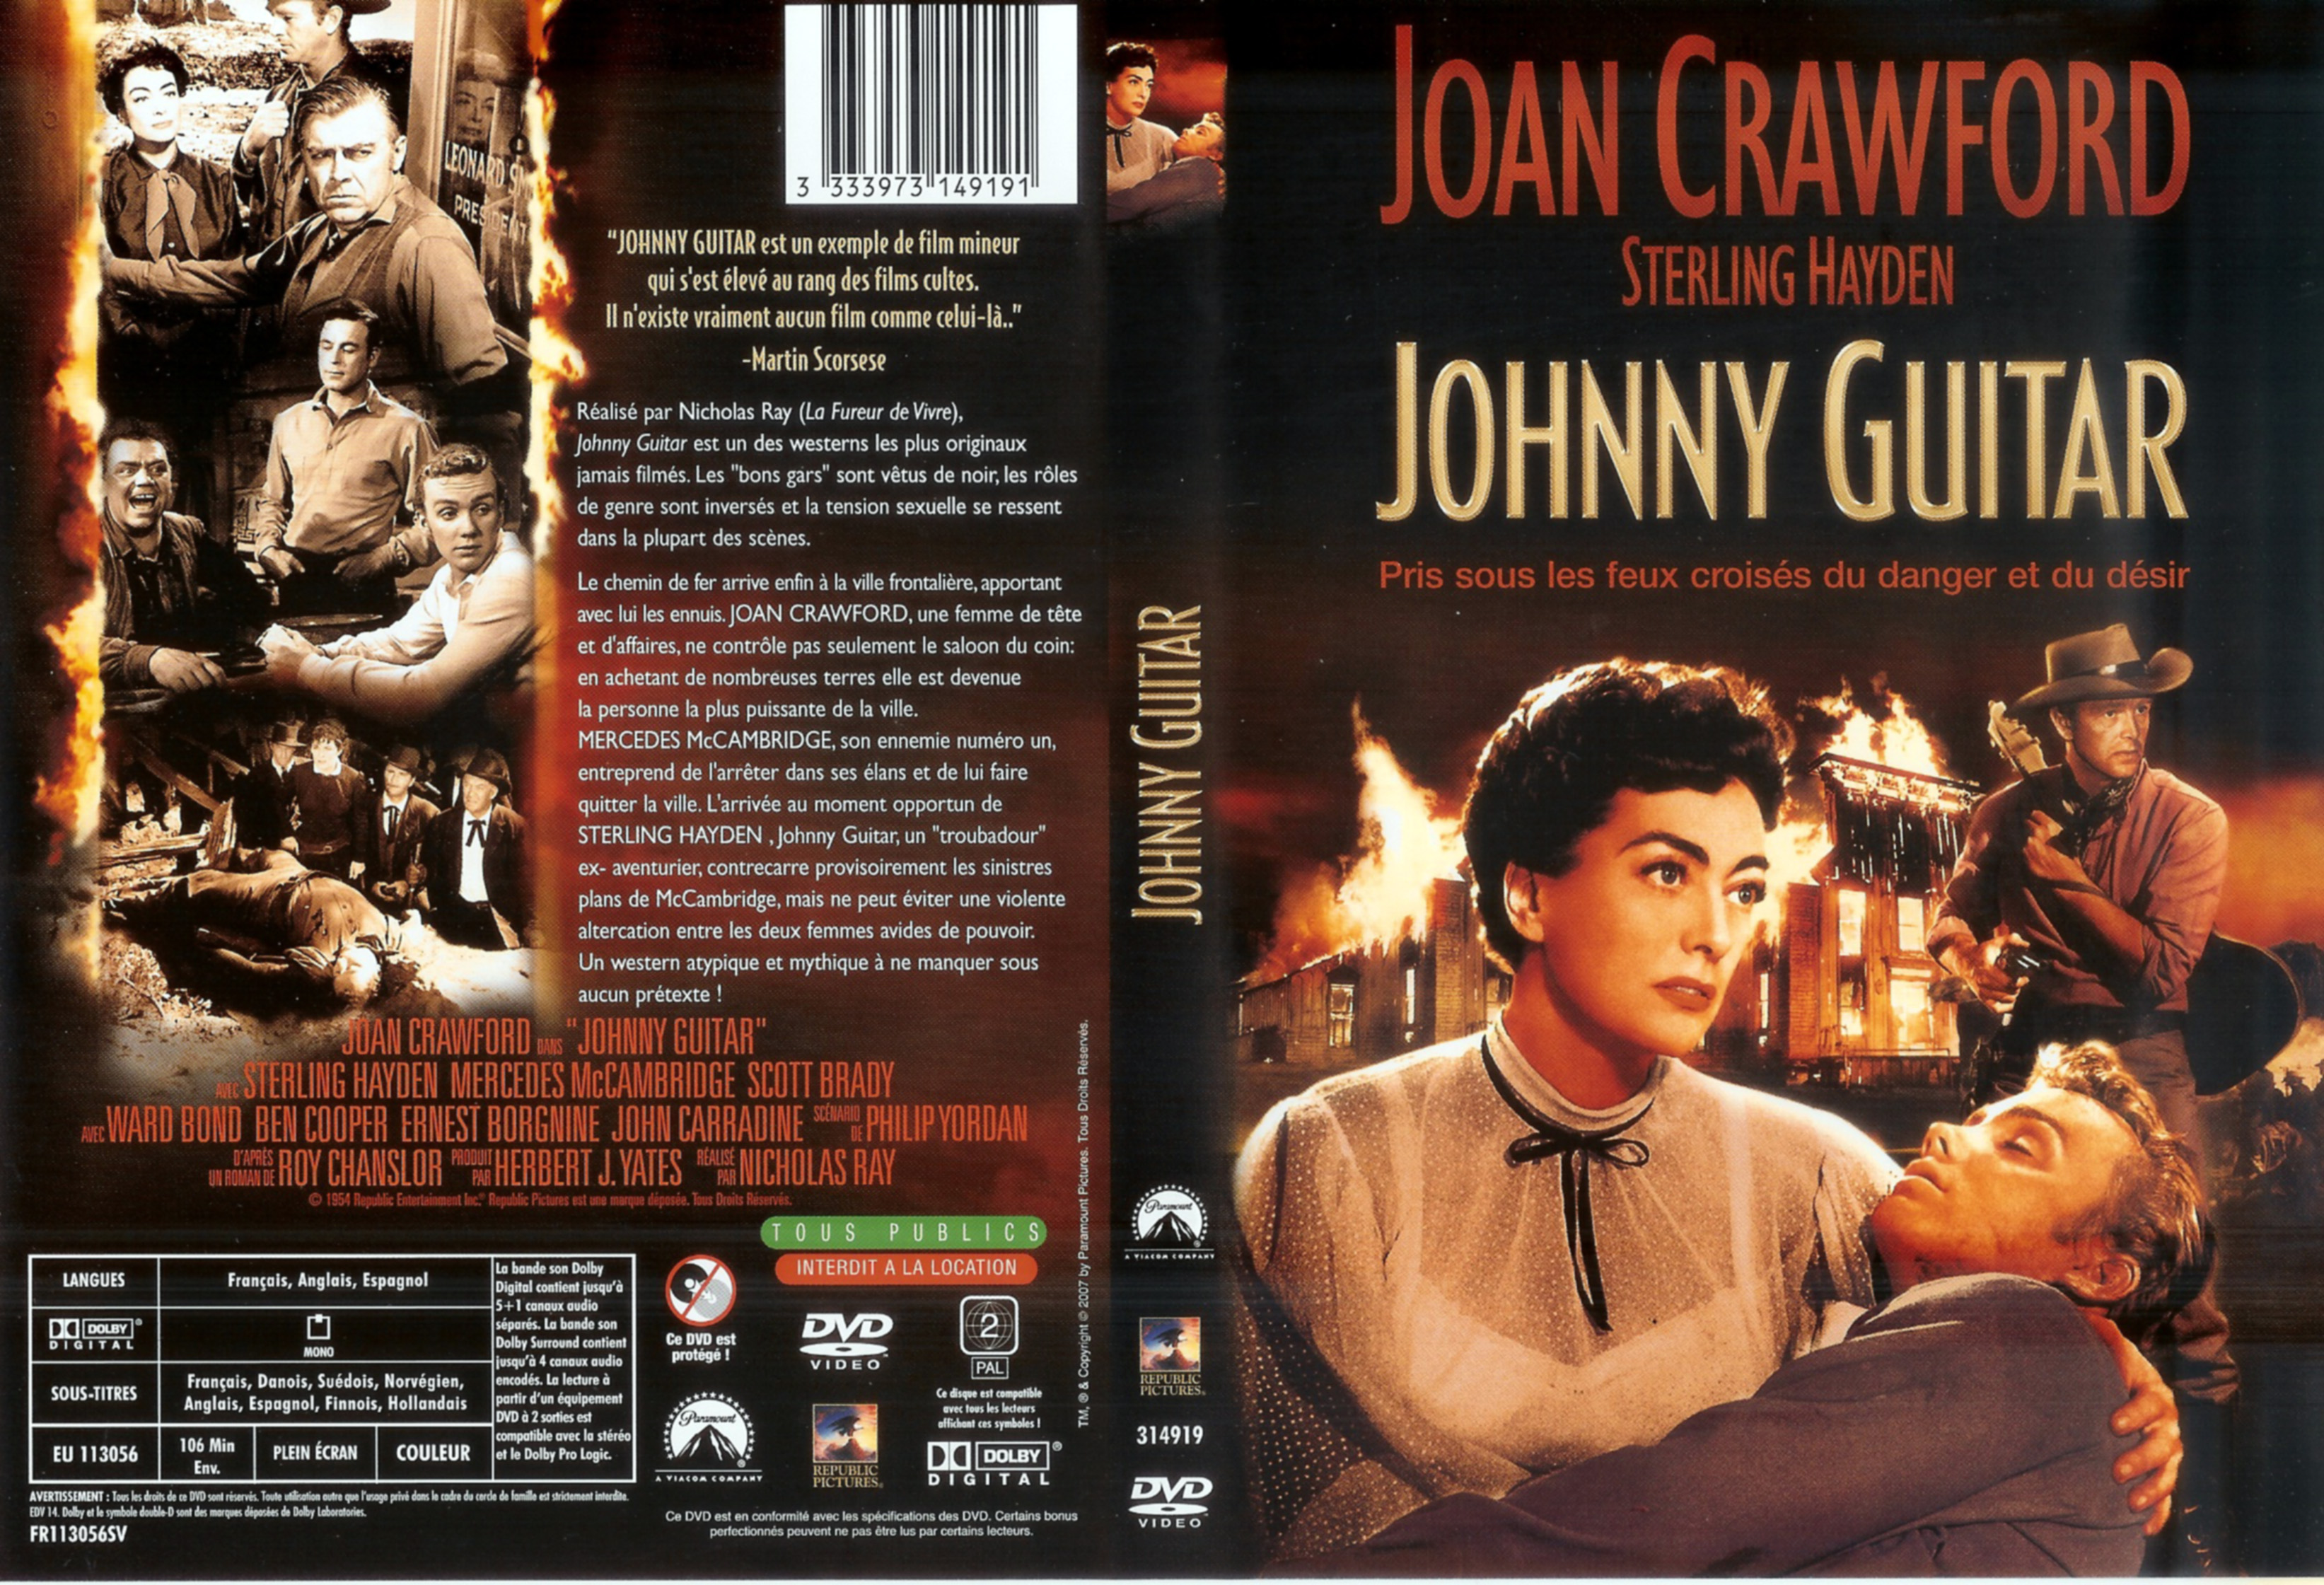 Jaquette DVD Johnny Guitar v3